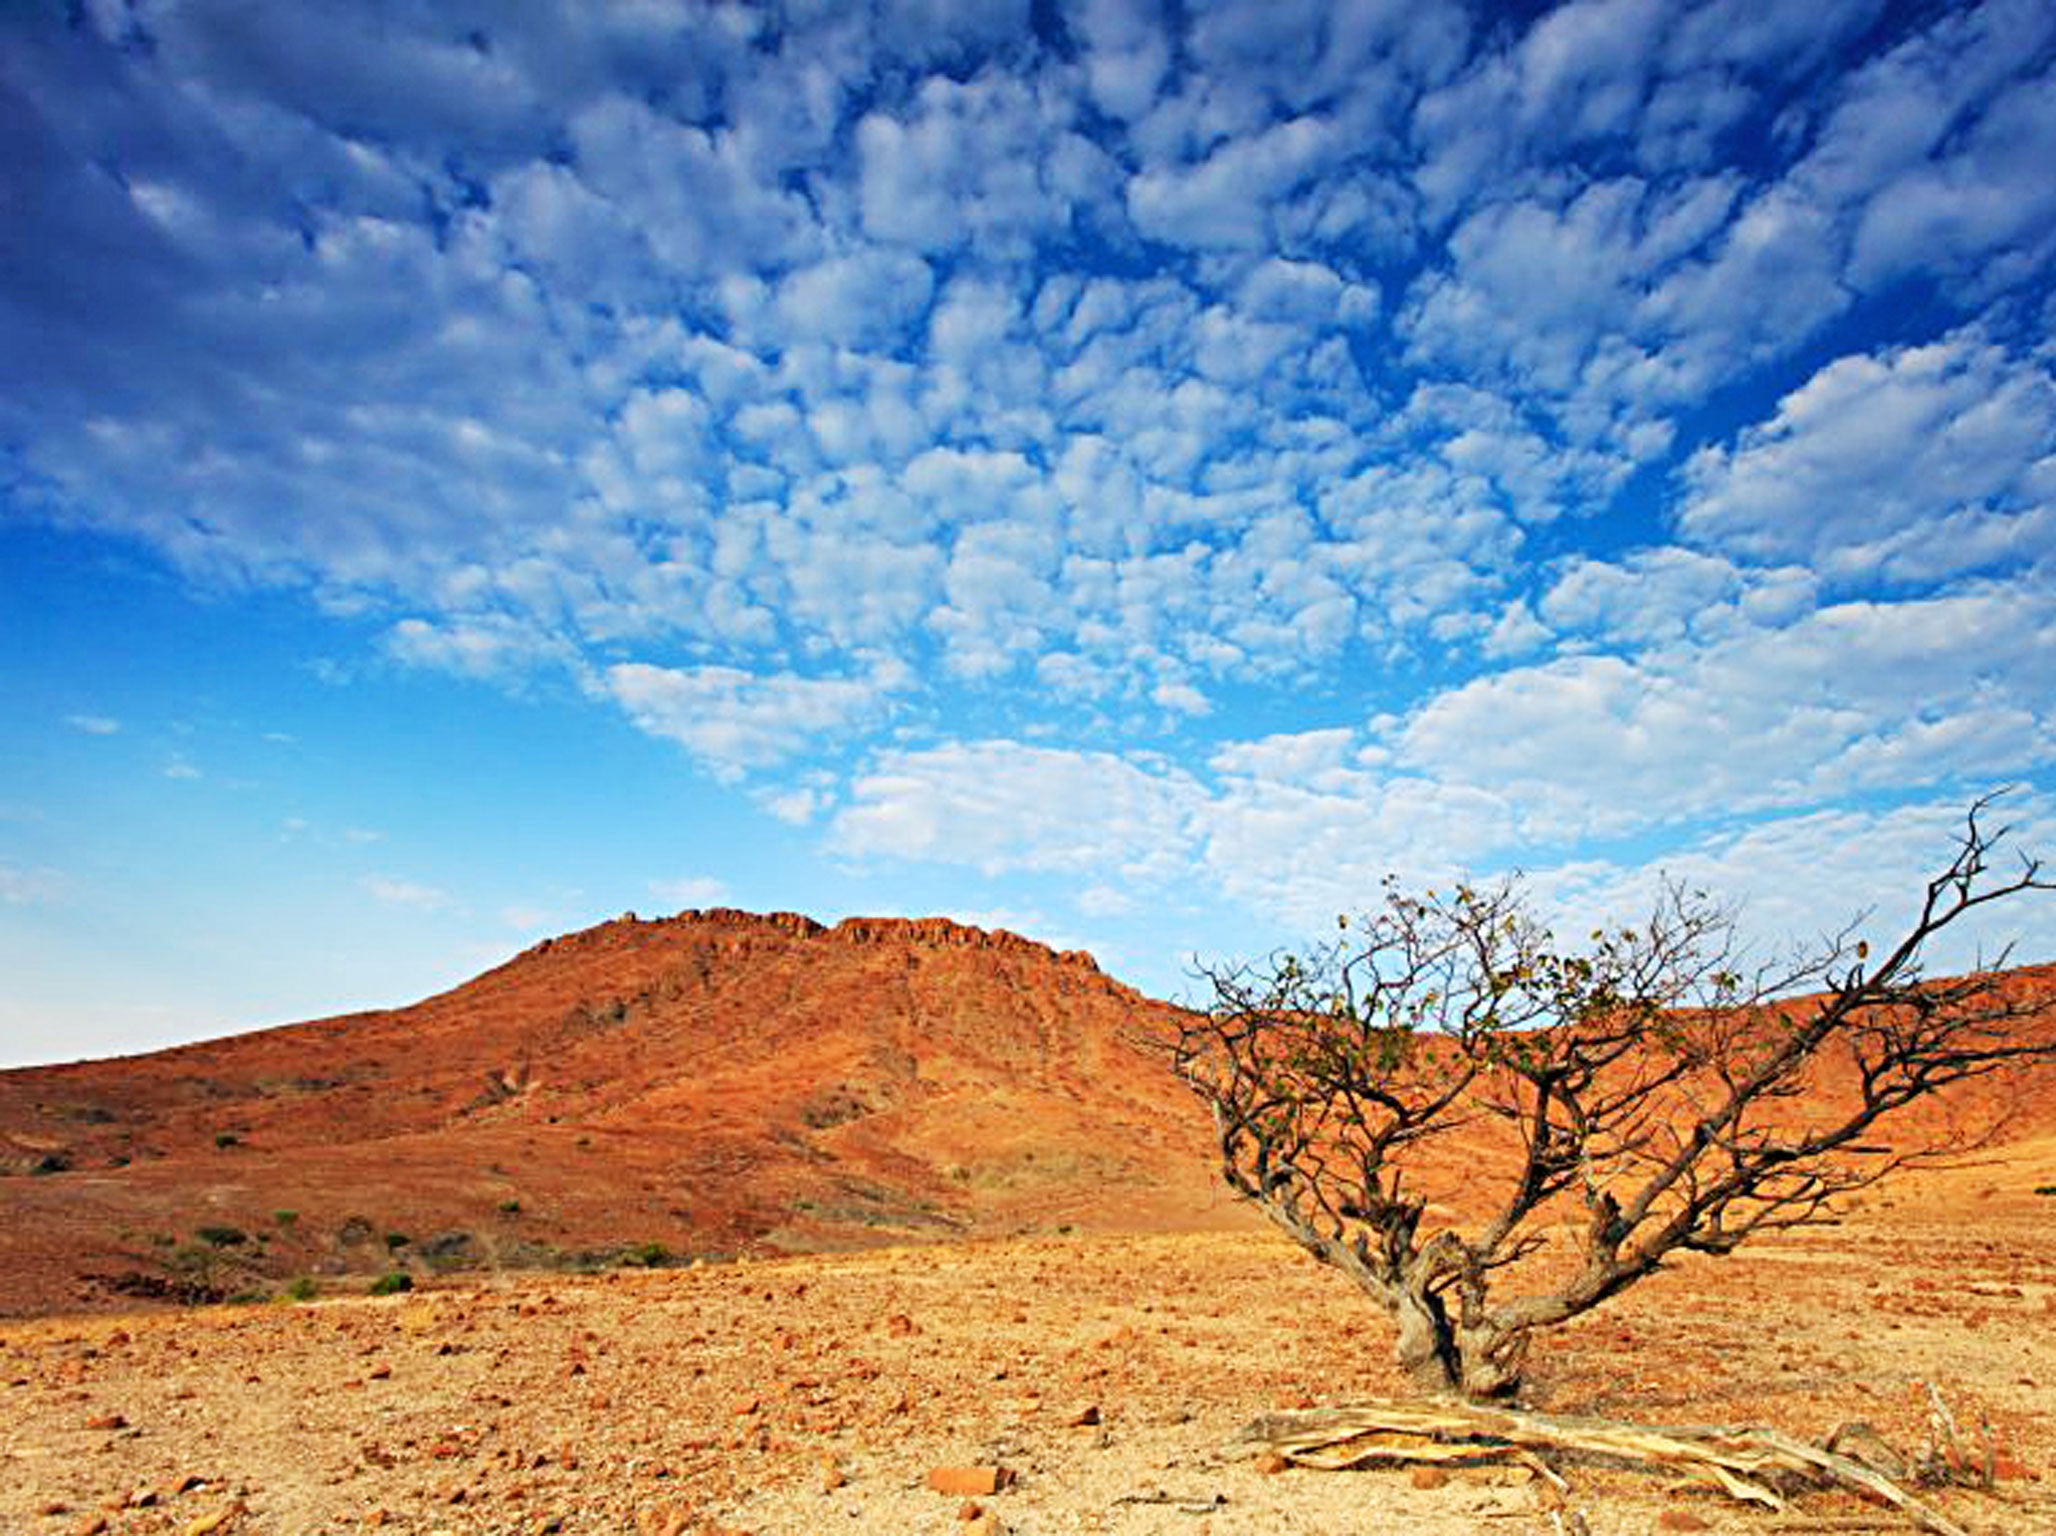 Just deserts: the stark landscape of Namibia